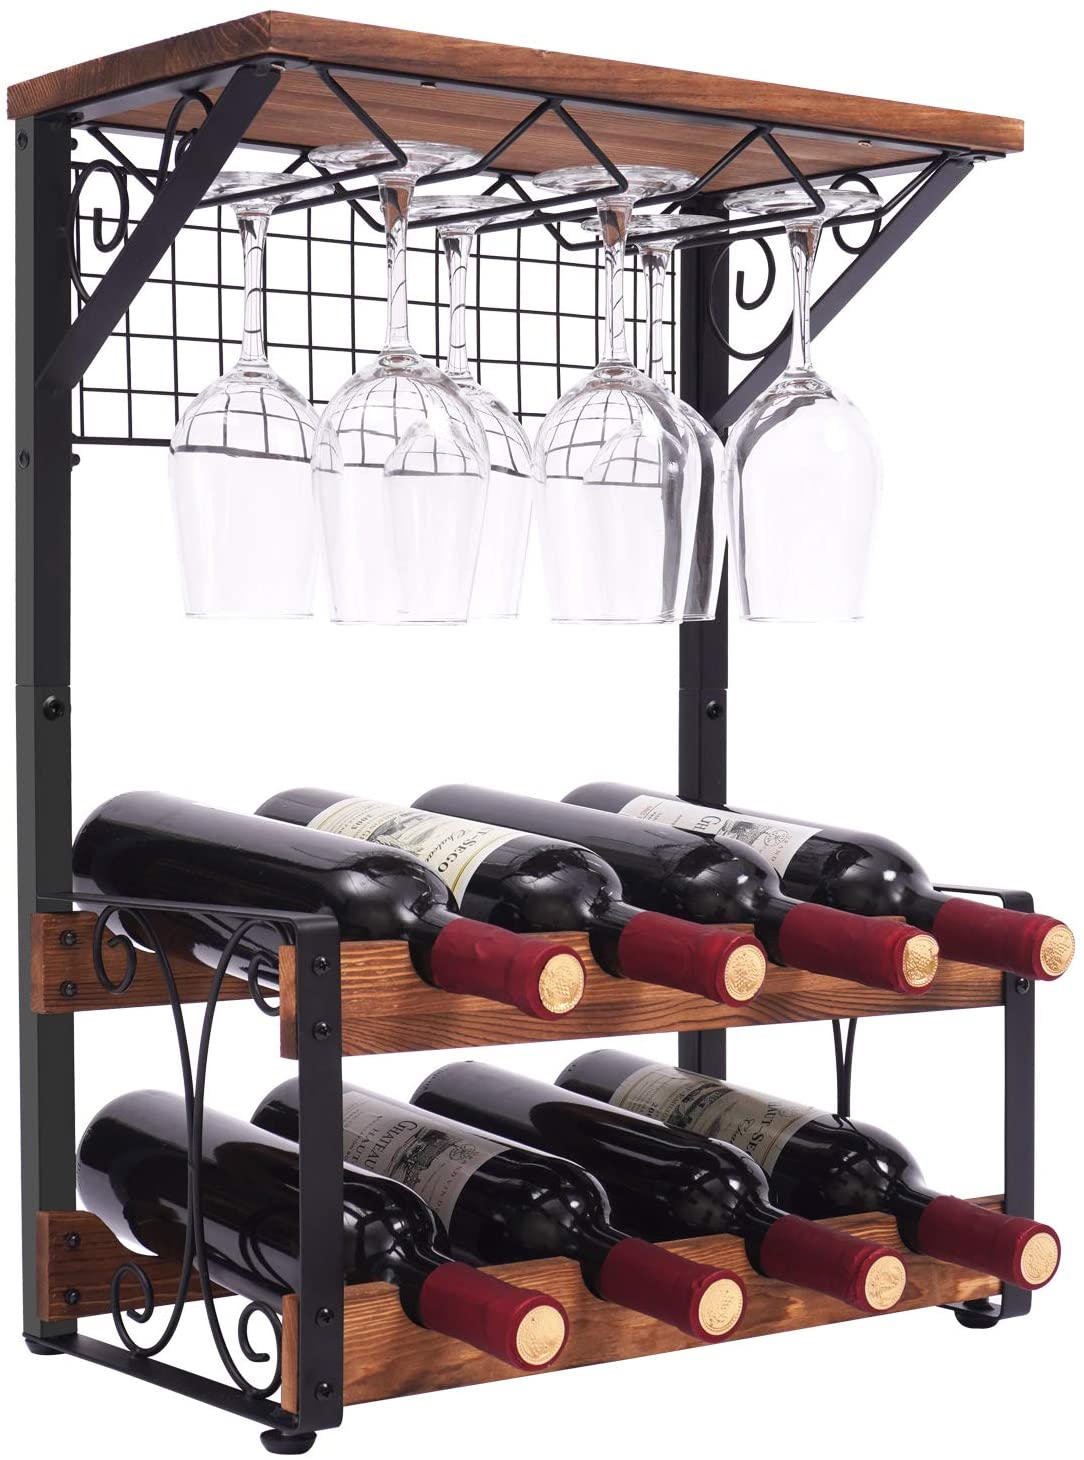 X-cosrack Retro Wine Rack For Small Spaces, 8-Bottles